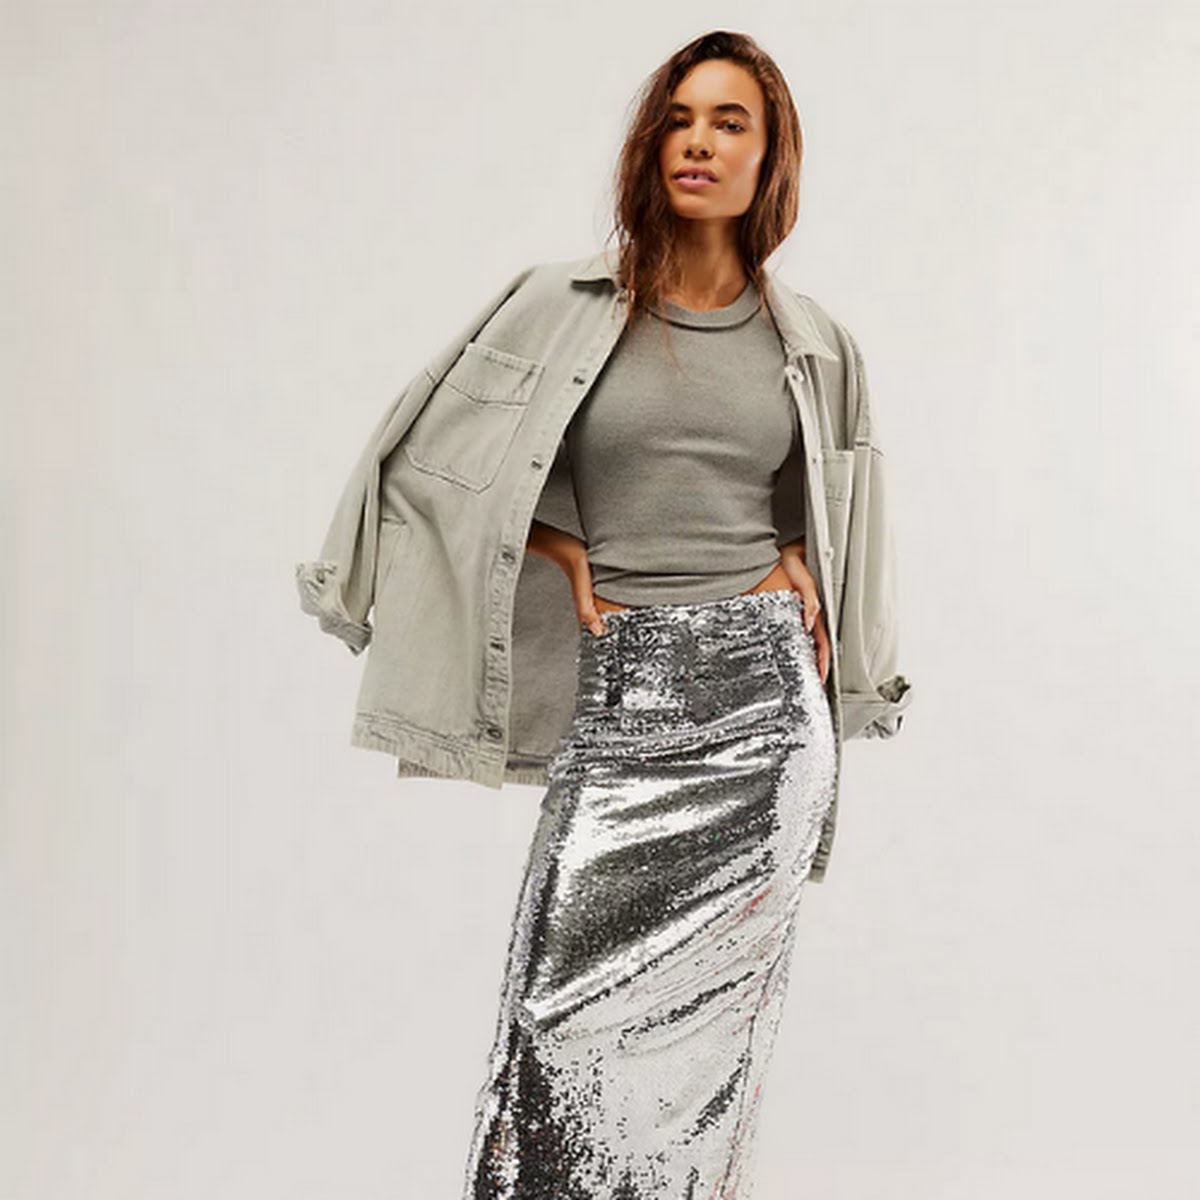 Kim Shui Silver Pailette Maxi Skirt, €264.96